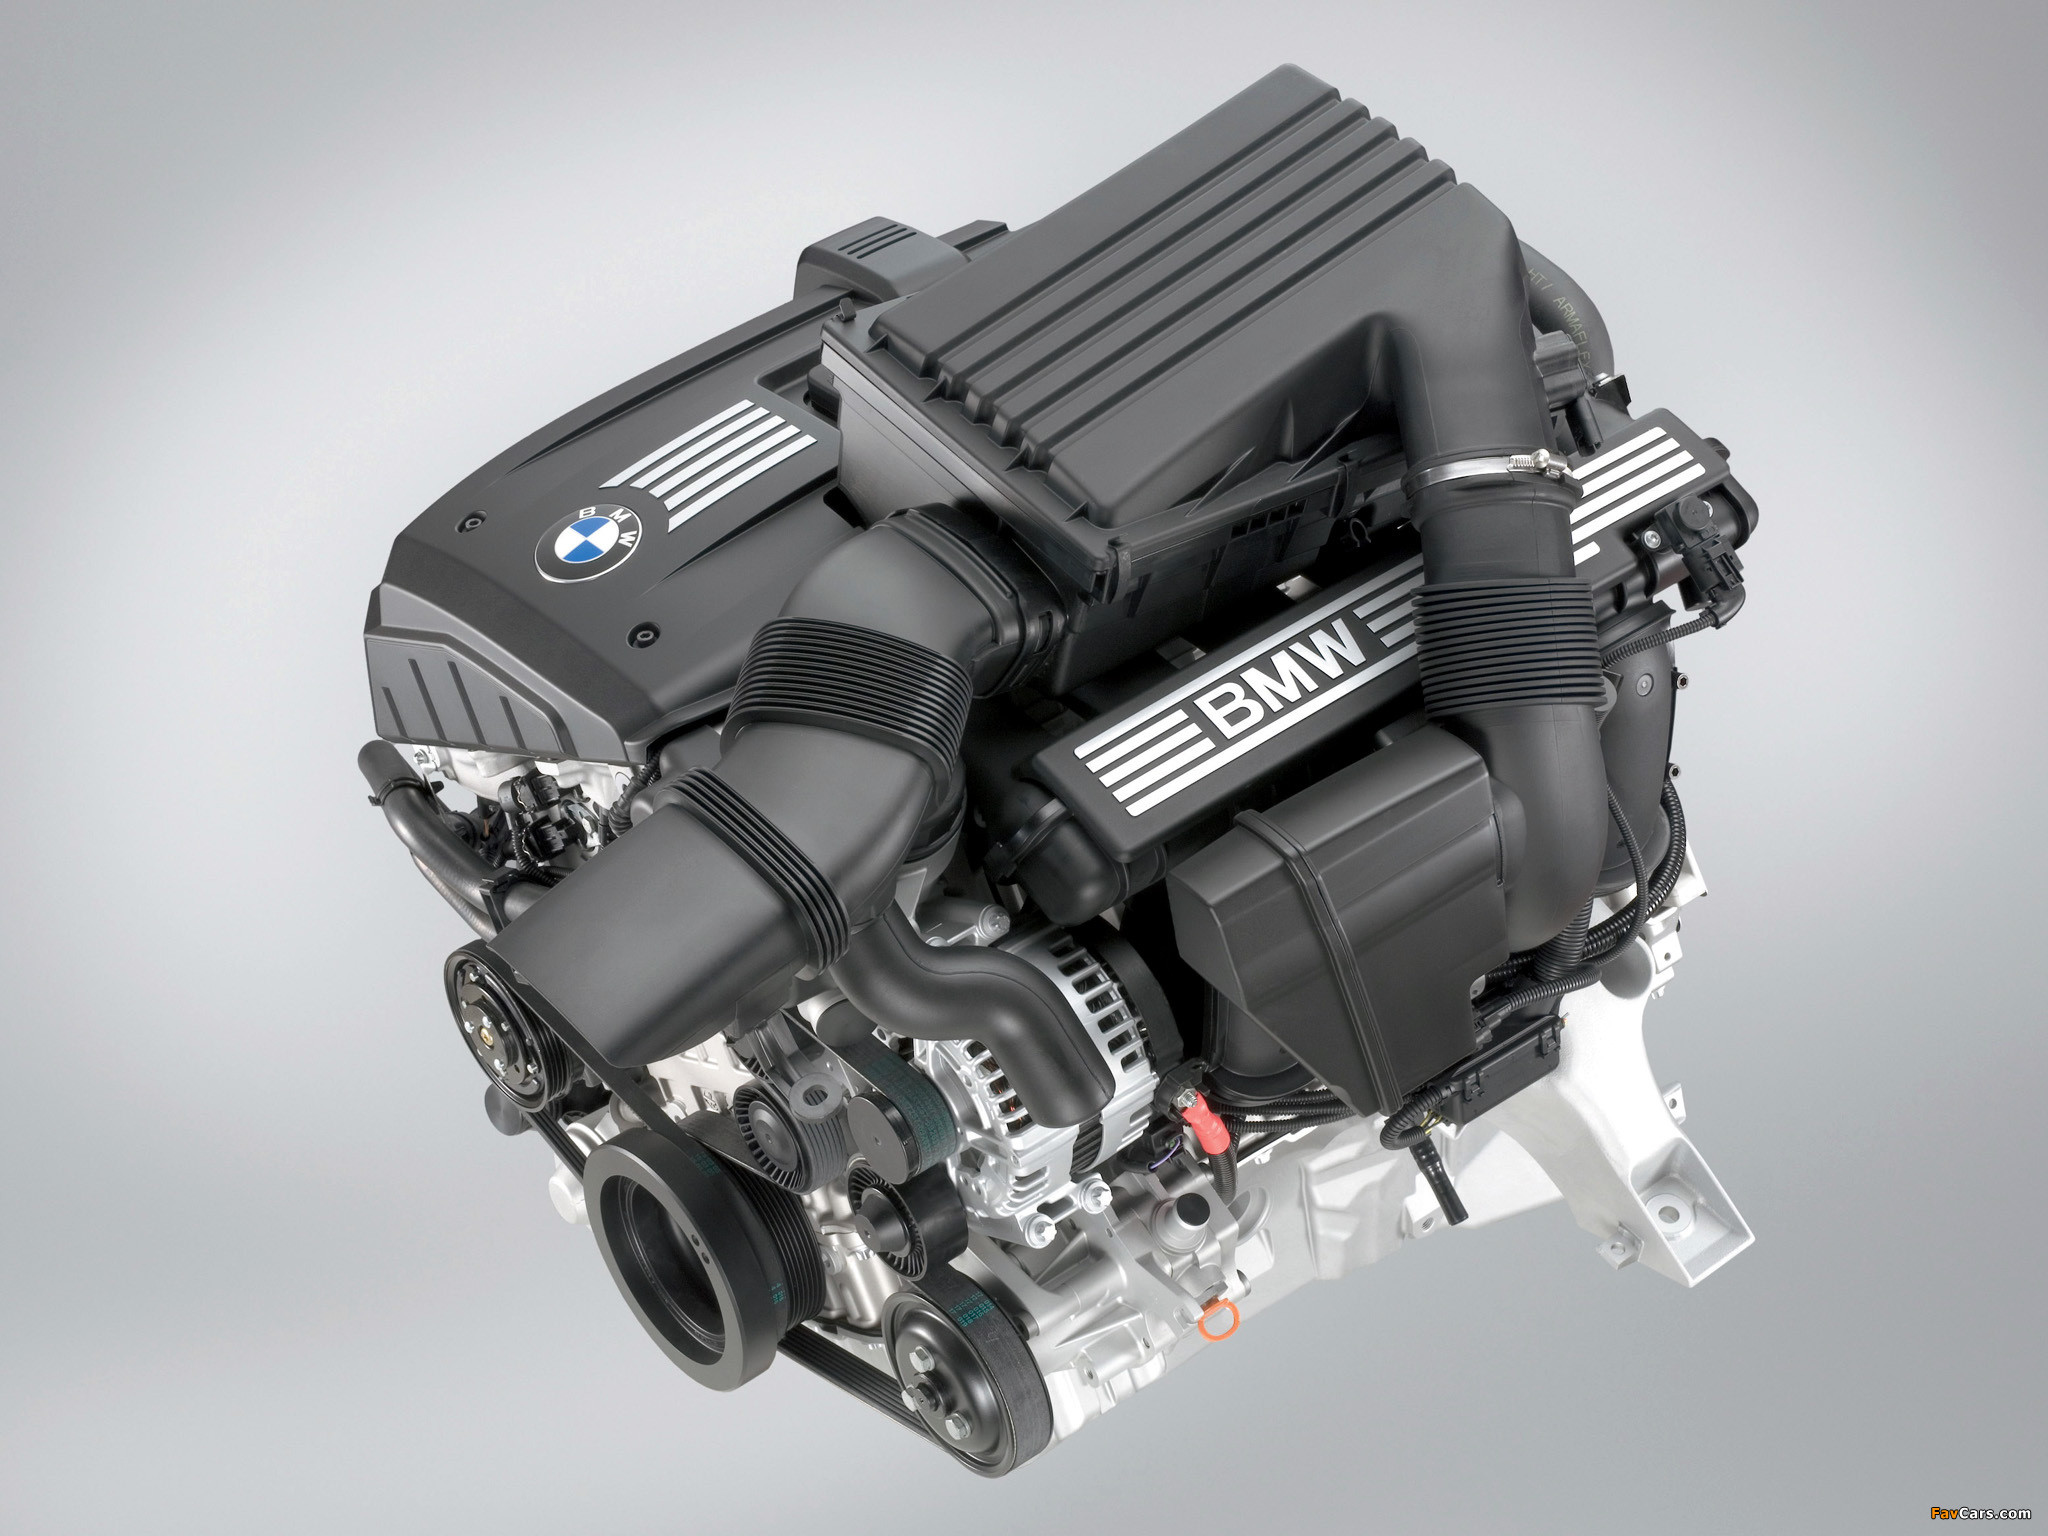 Bmw x6 двигатели. BMW e70 m57 двигатель. BMW n52b30 e70. Двигатель BMW x6 m57. BMW m52 b30.